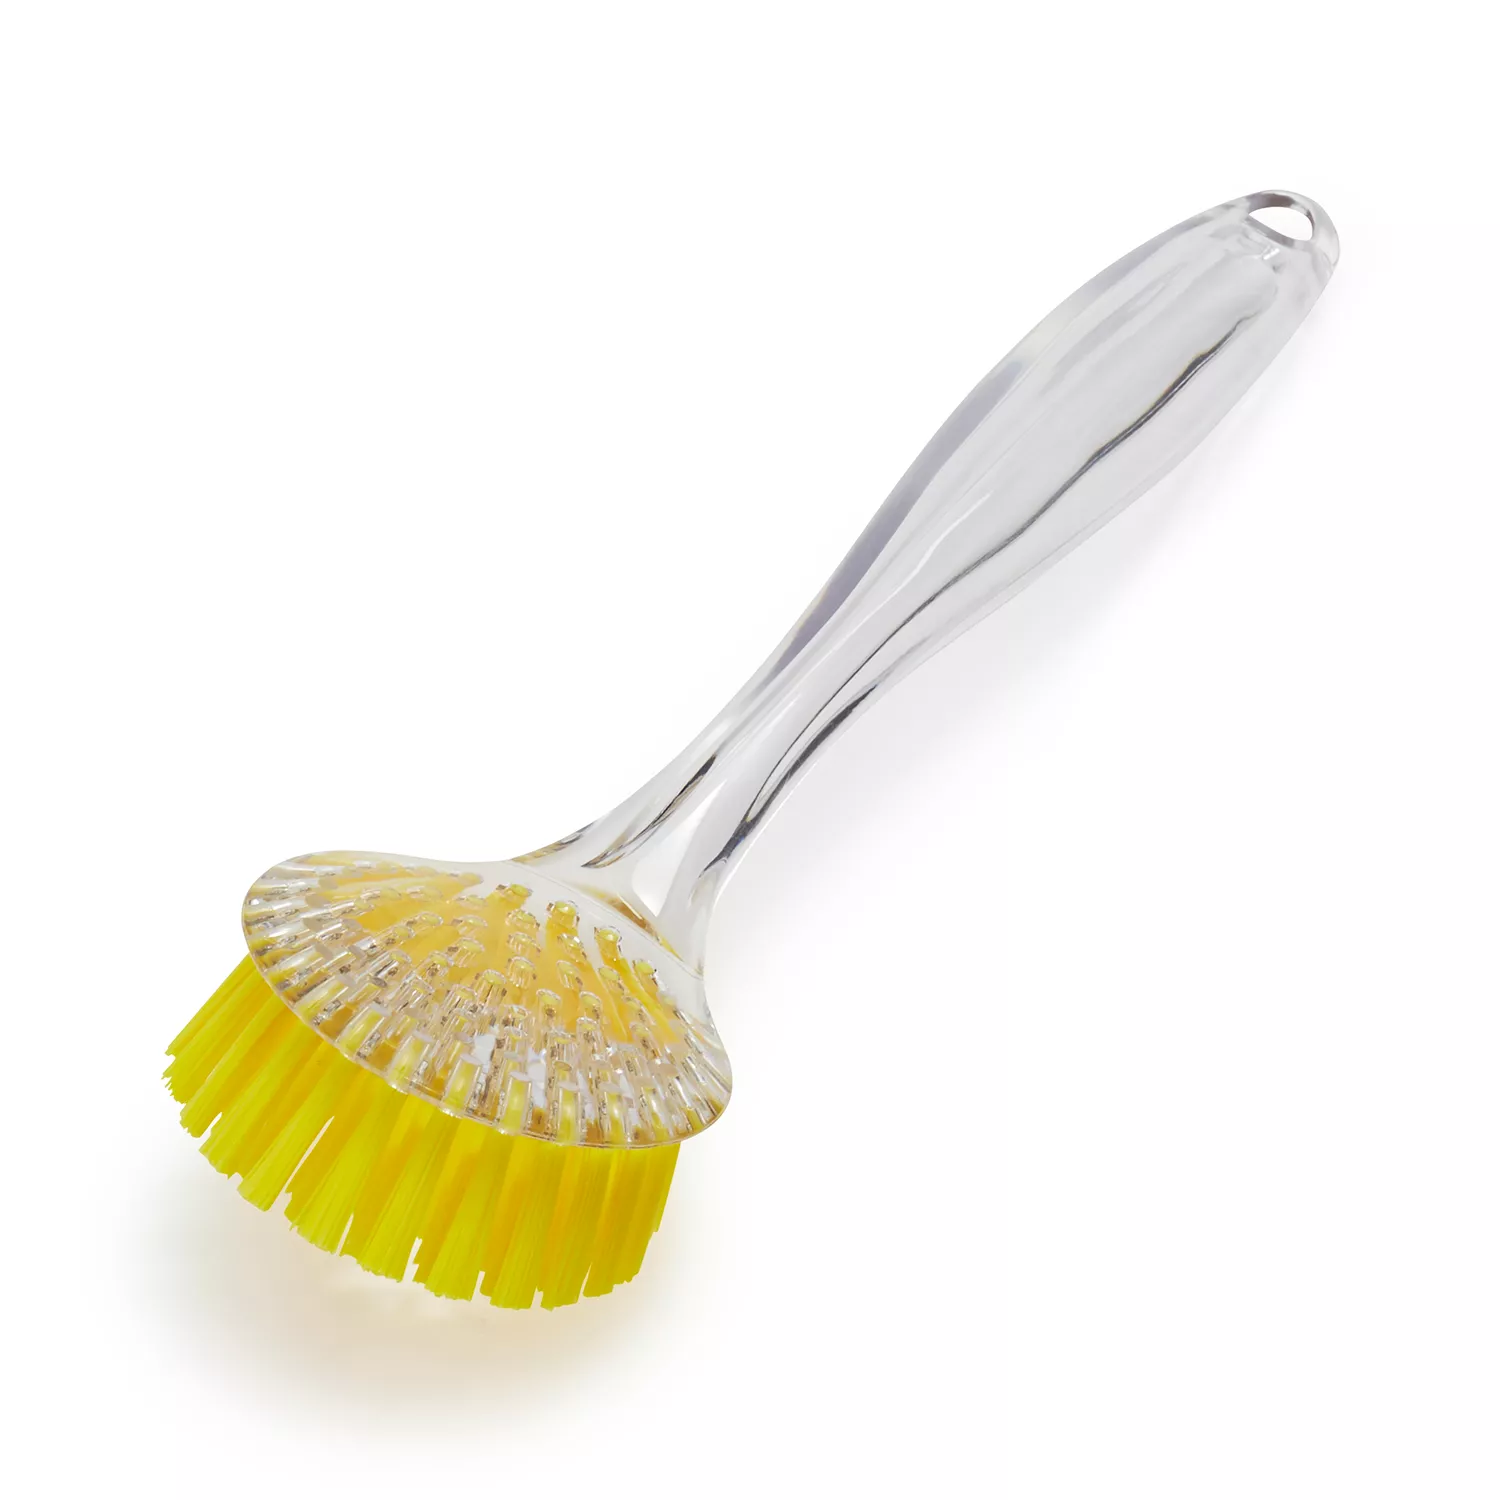 Sabco Radial Dish Brush